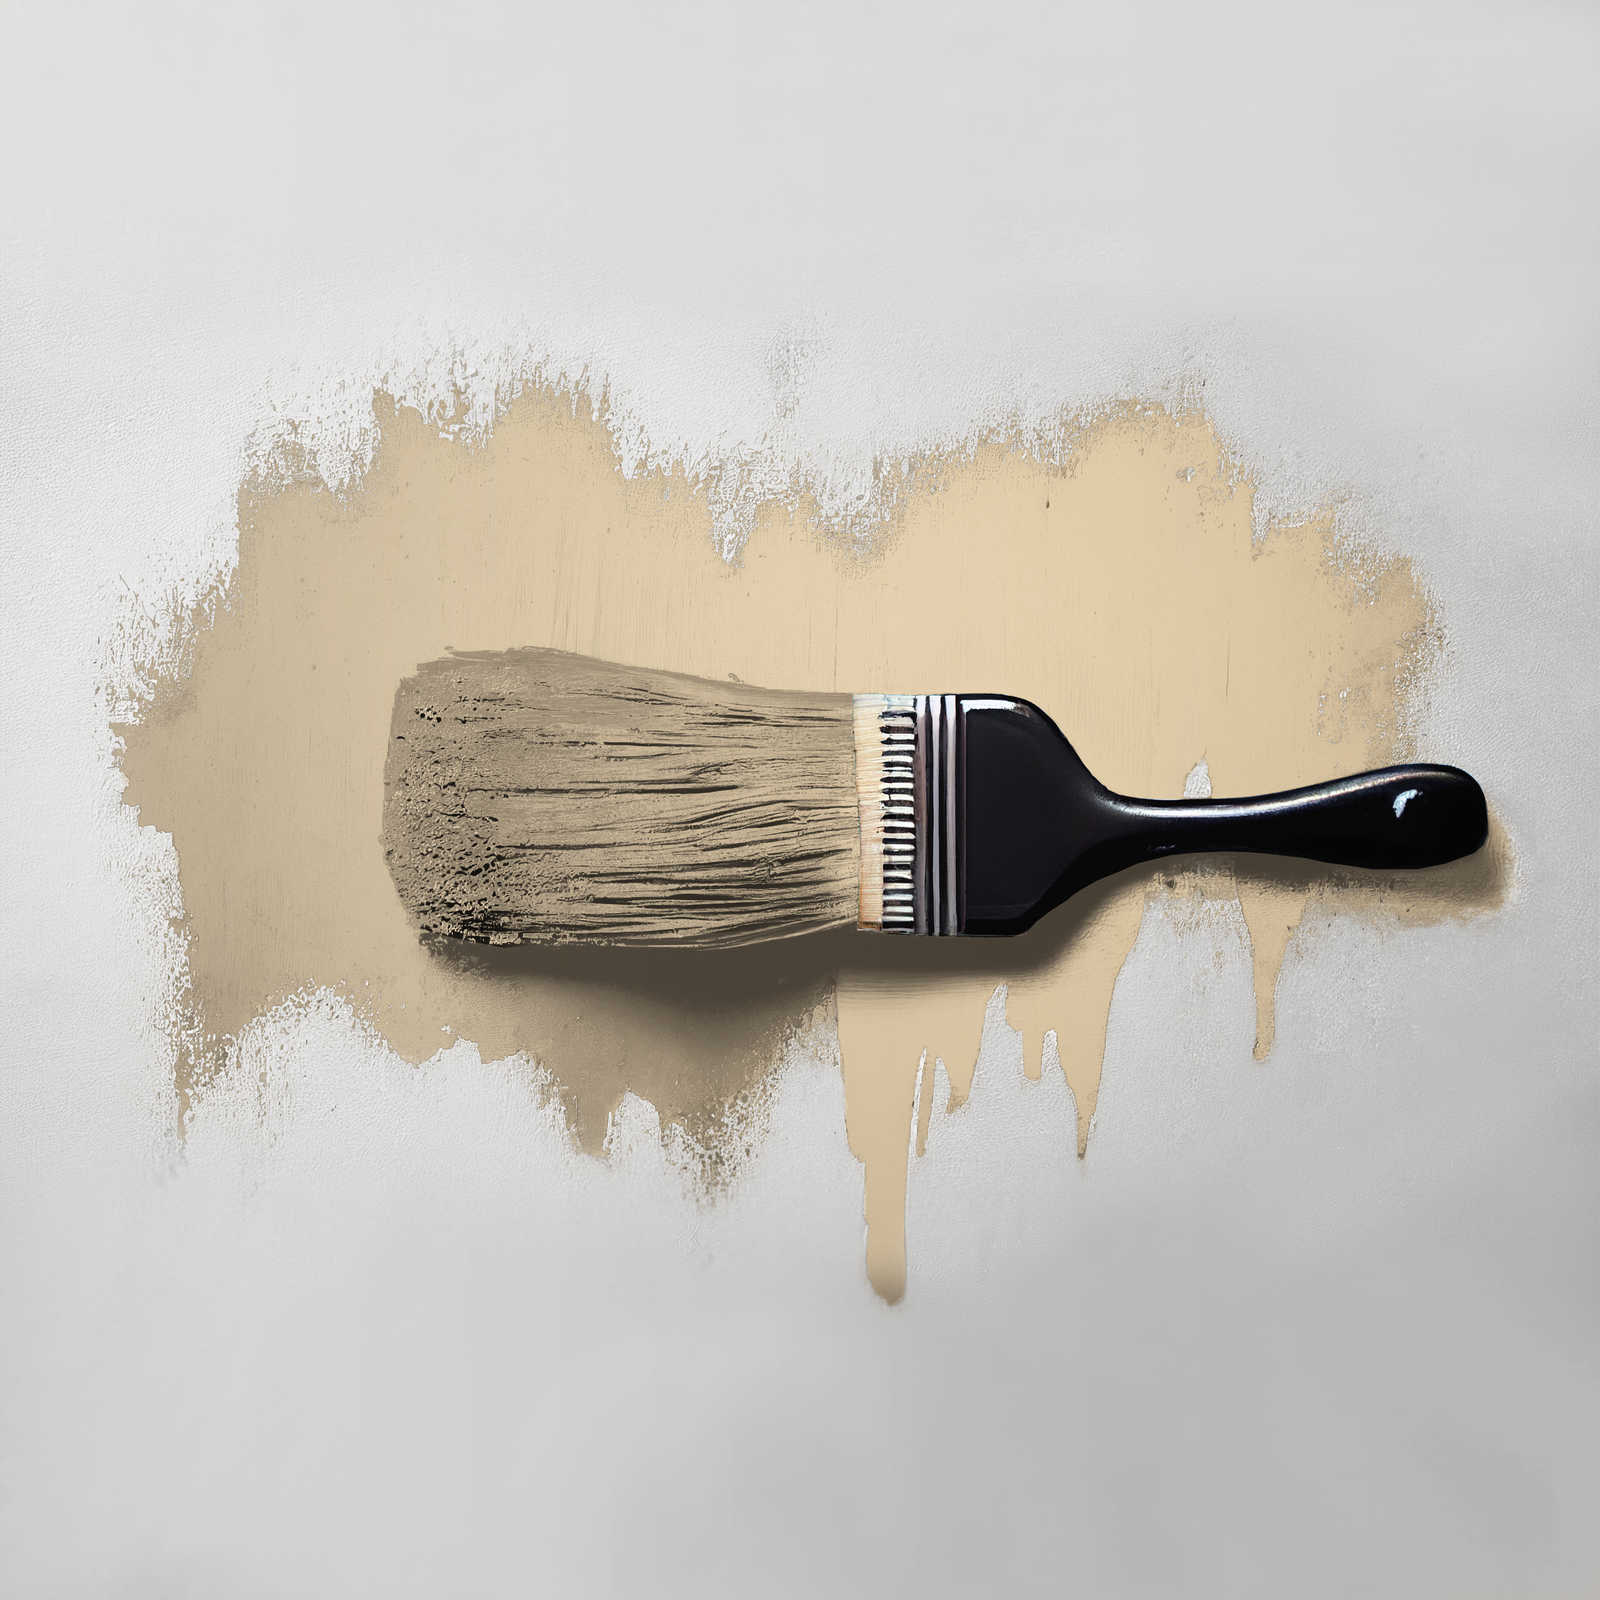             Pintura mural TCK6003 »Asthetic Artichoke« en beige hogareño – 5,0 litro
        